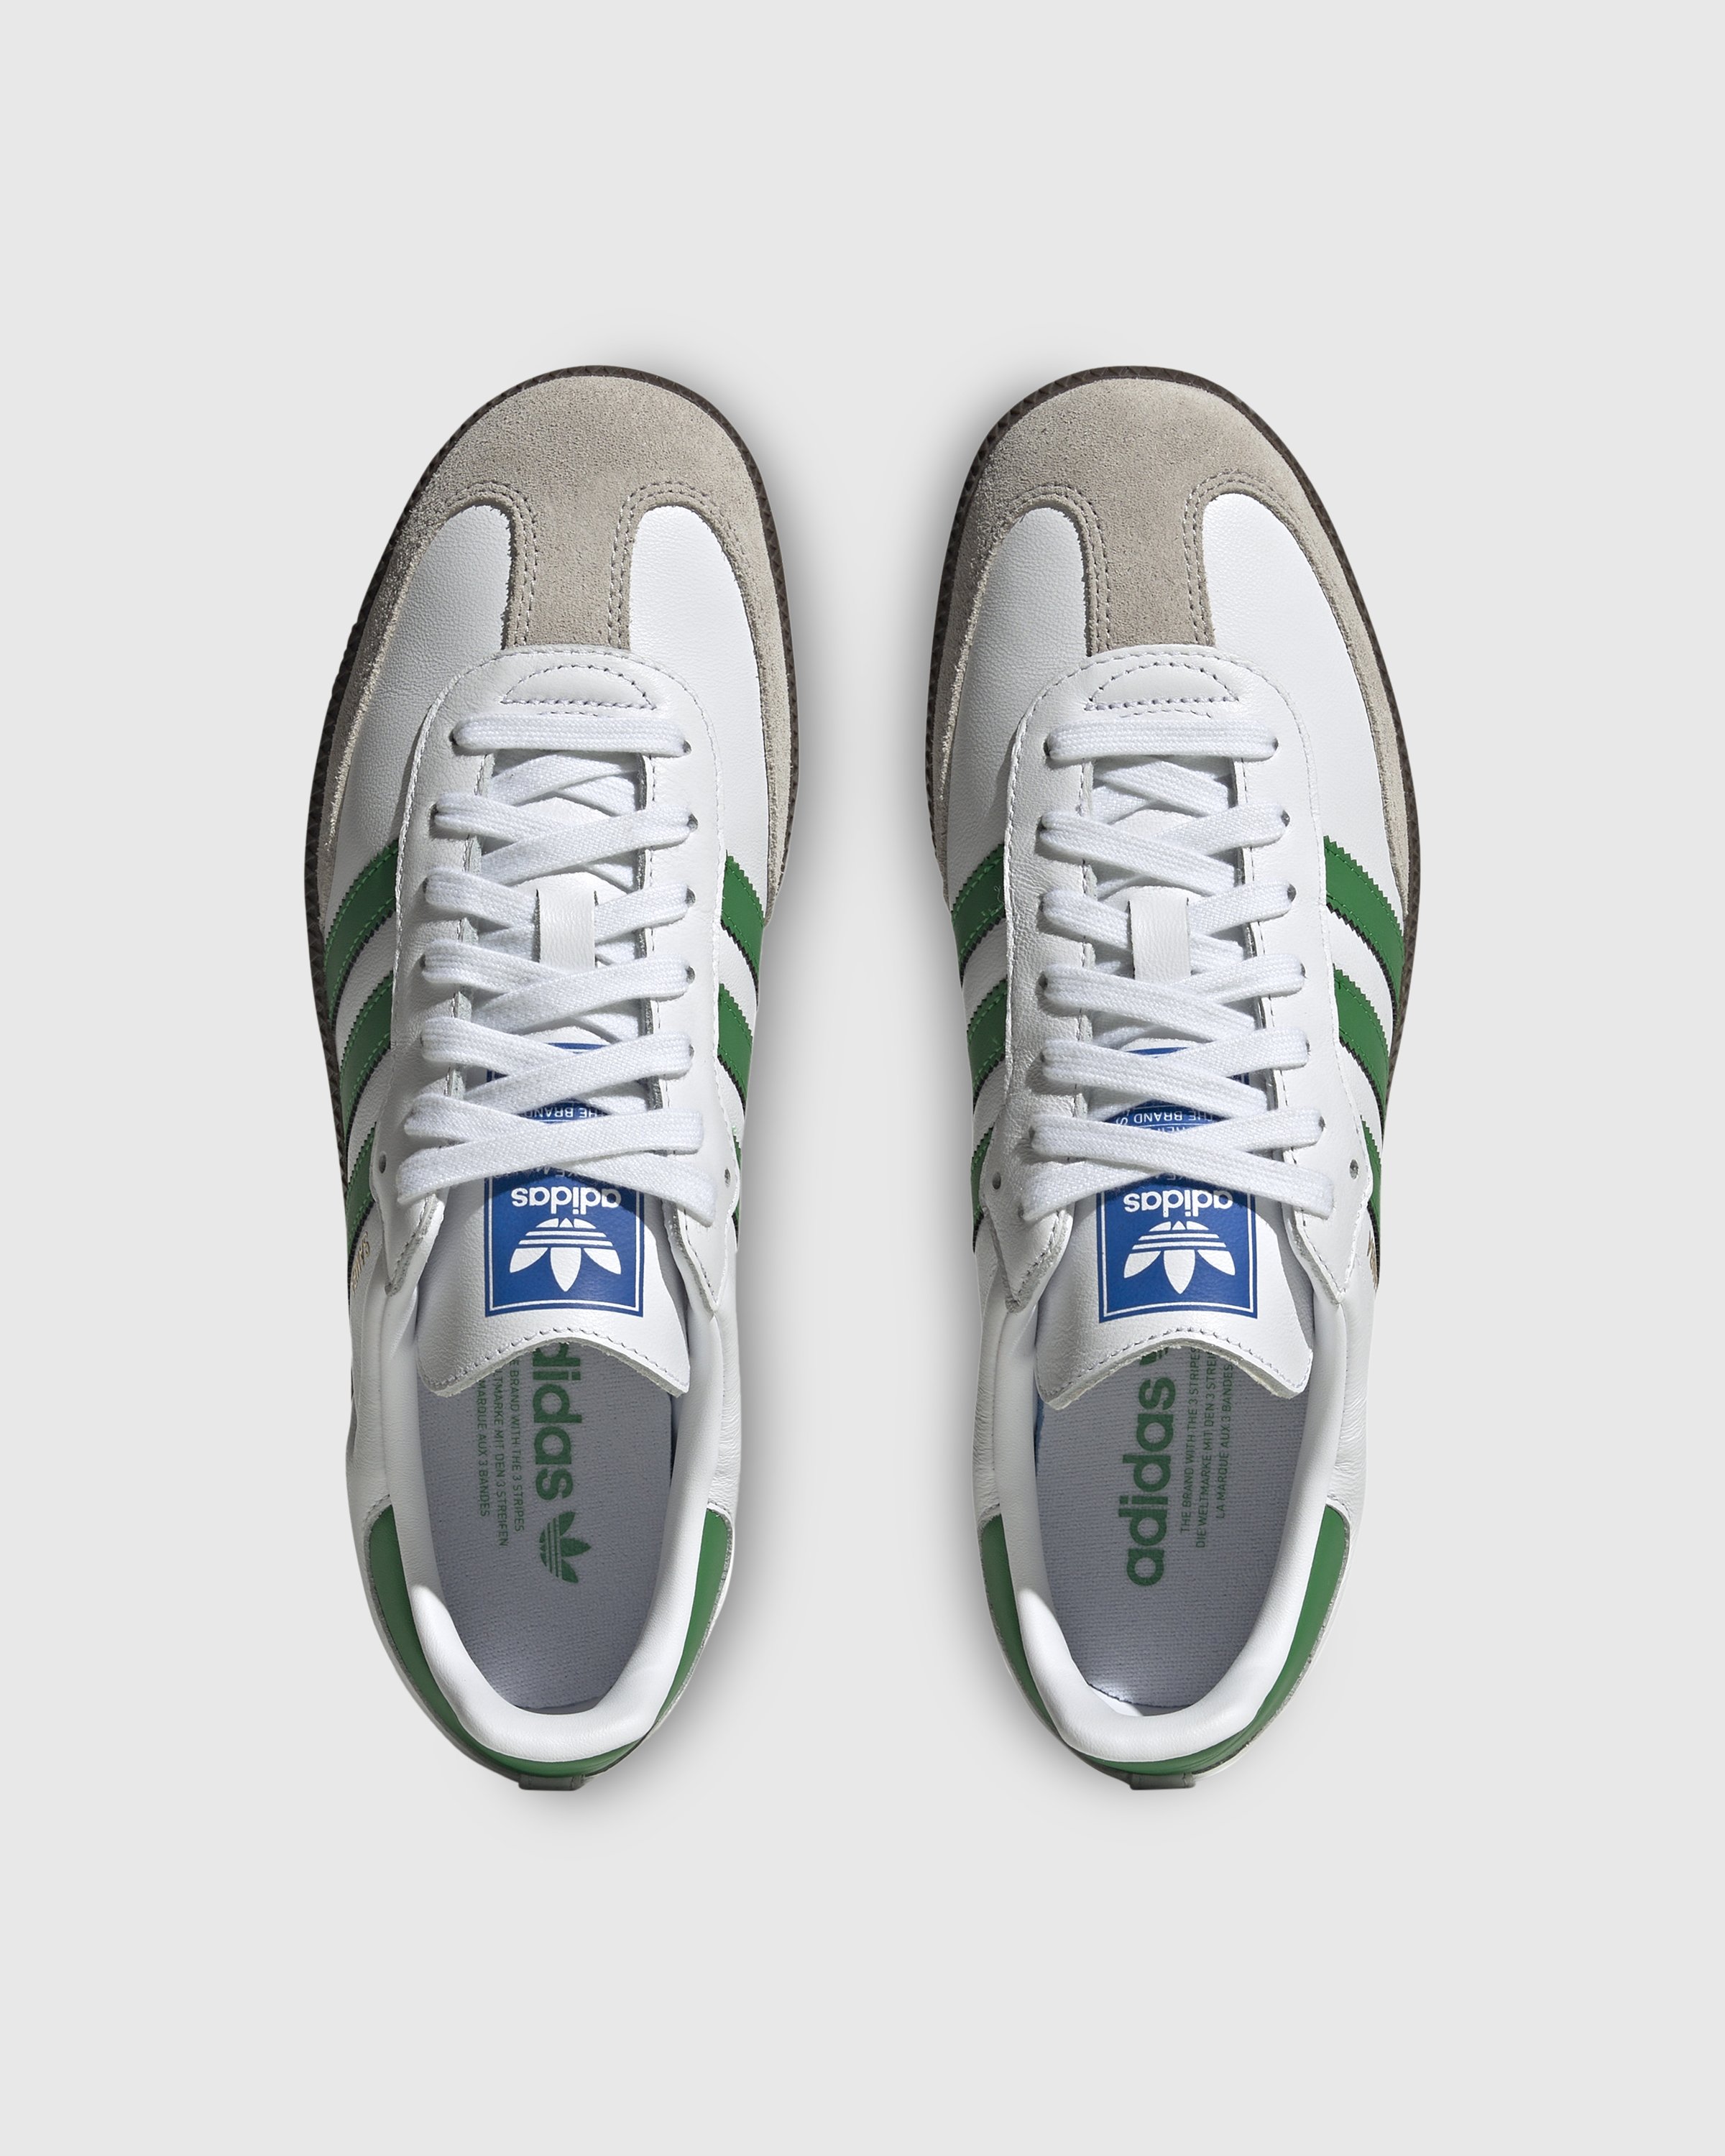 Adidas - Samba OG White/Green - Footwear - White - Image 4